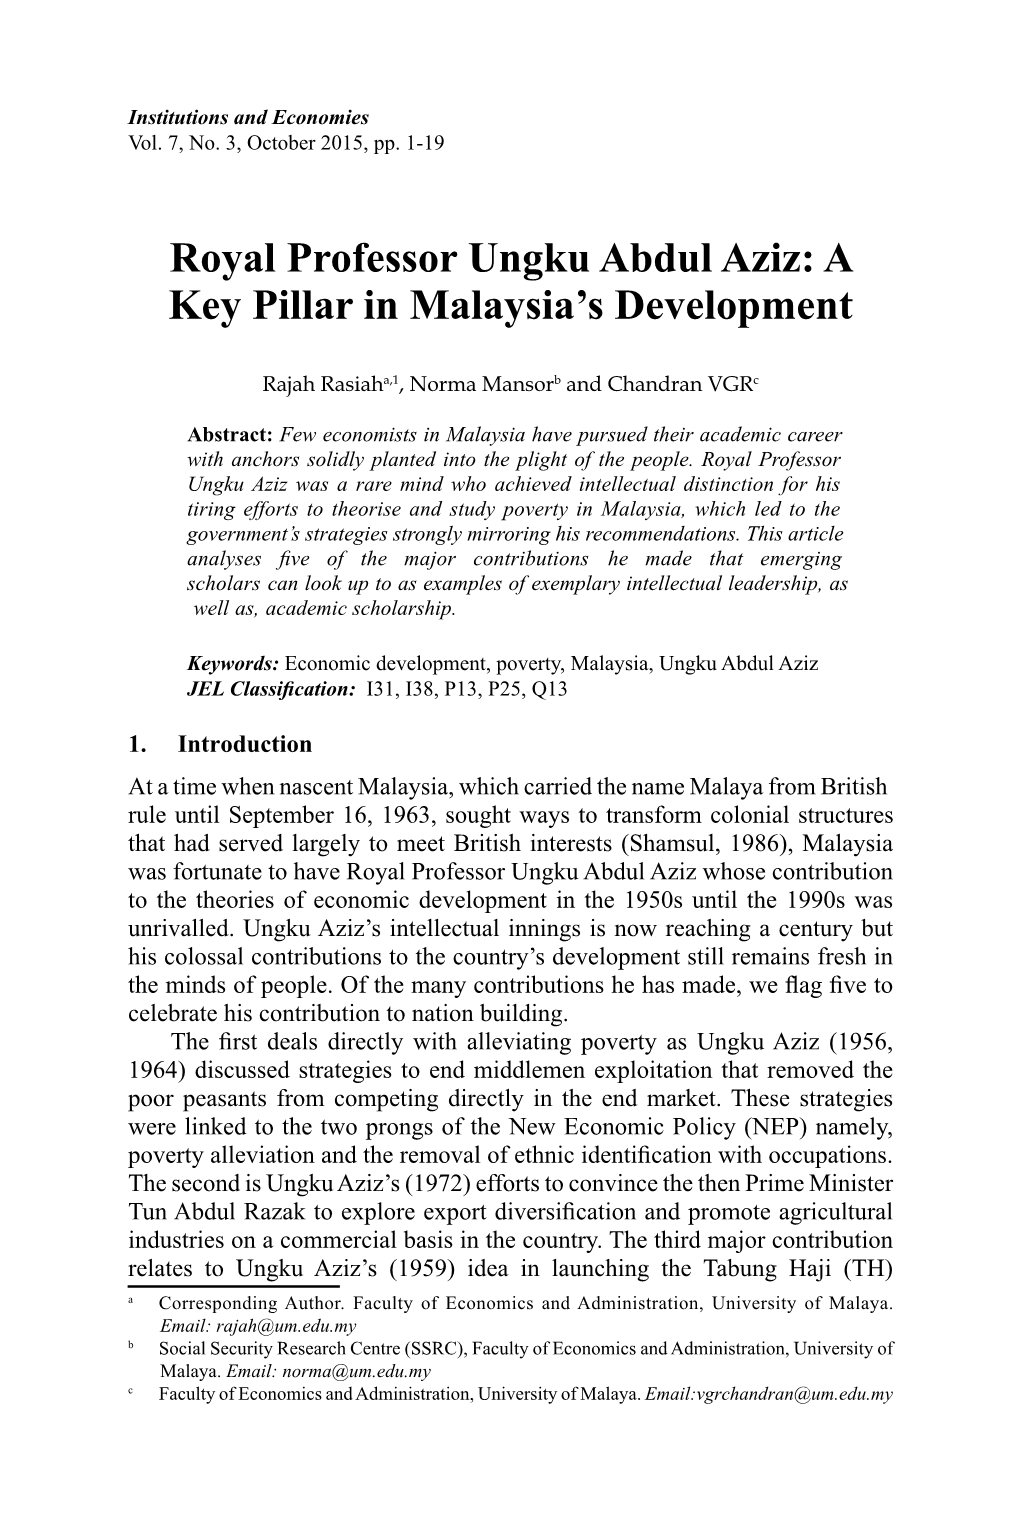 Royal Professor Ungku Abdul Aziz: a Key Pillar in Malaysia’S Development